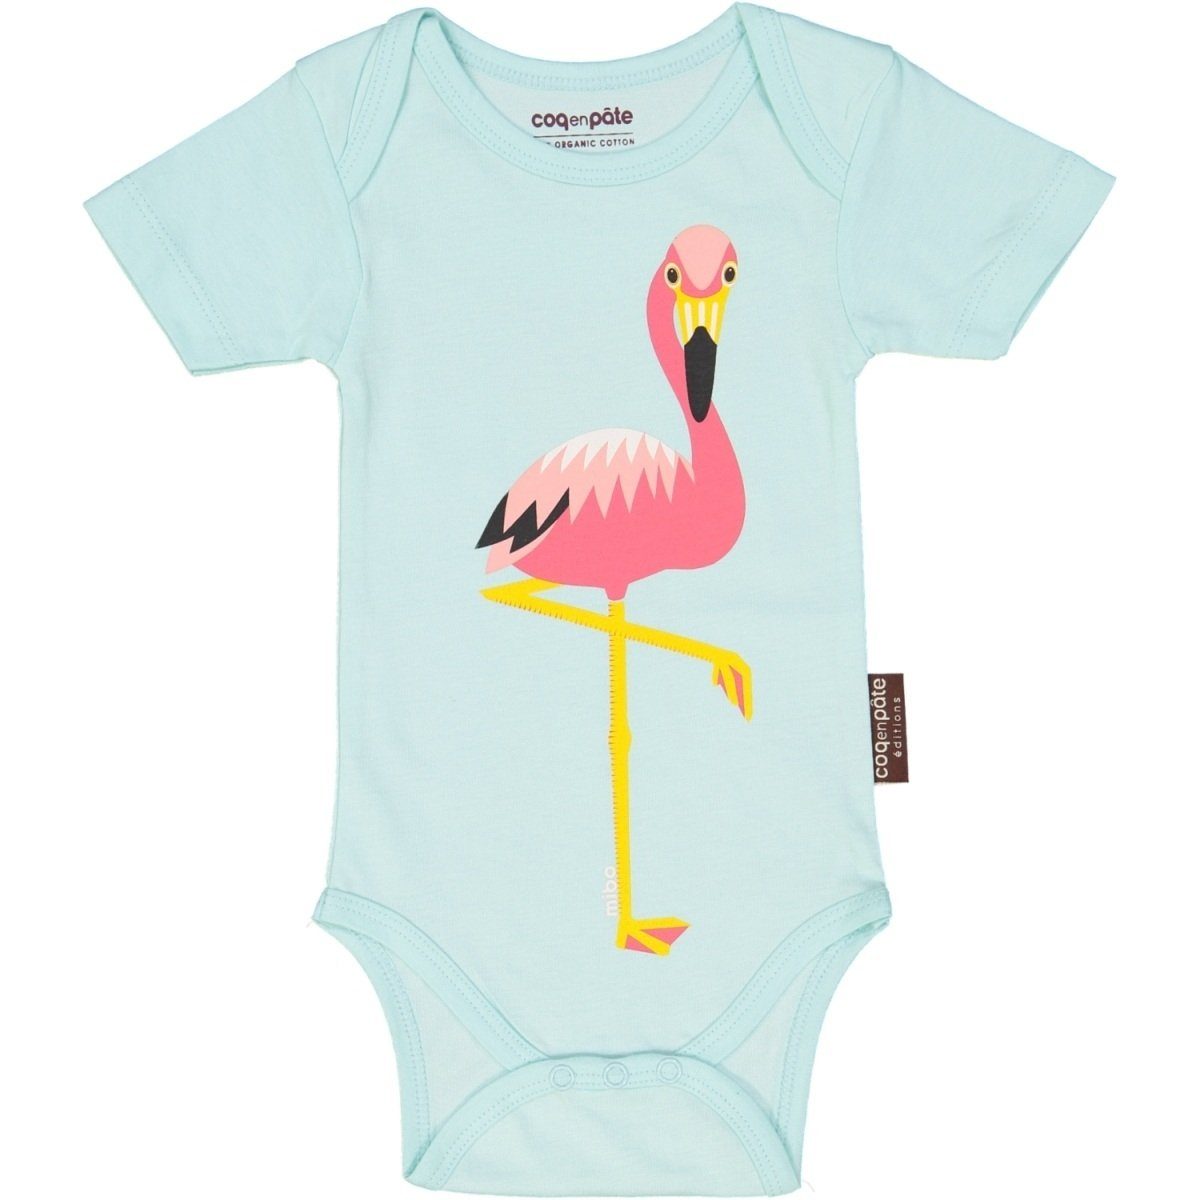 COQ EN PATE Kurzarmbody Body kurzarm 3-6 Monate 68 cm farbenfroh mit Tiermotiven Hellblau Flamingo